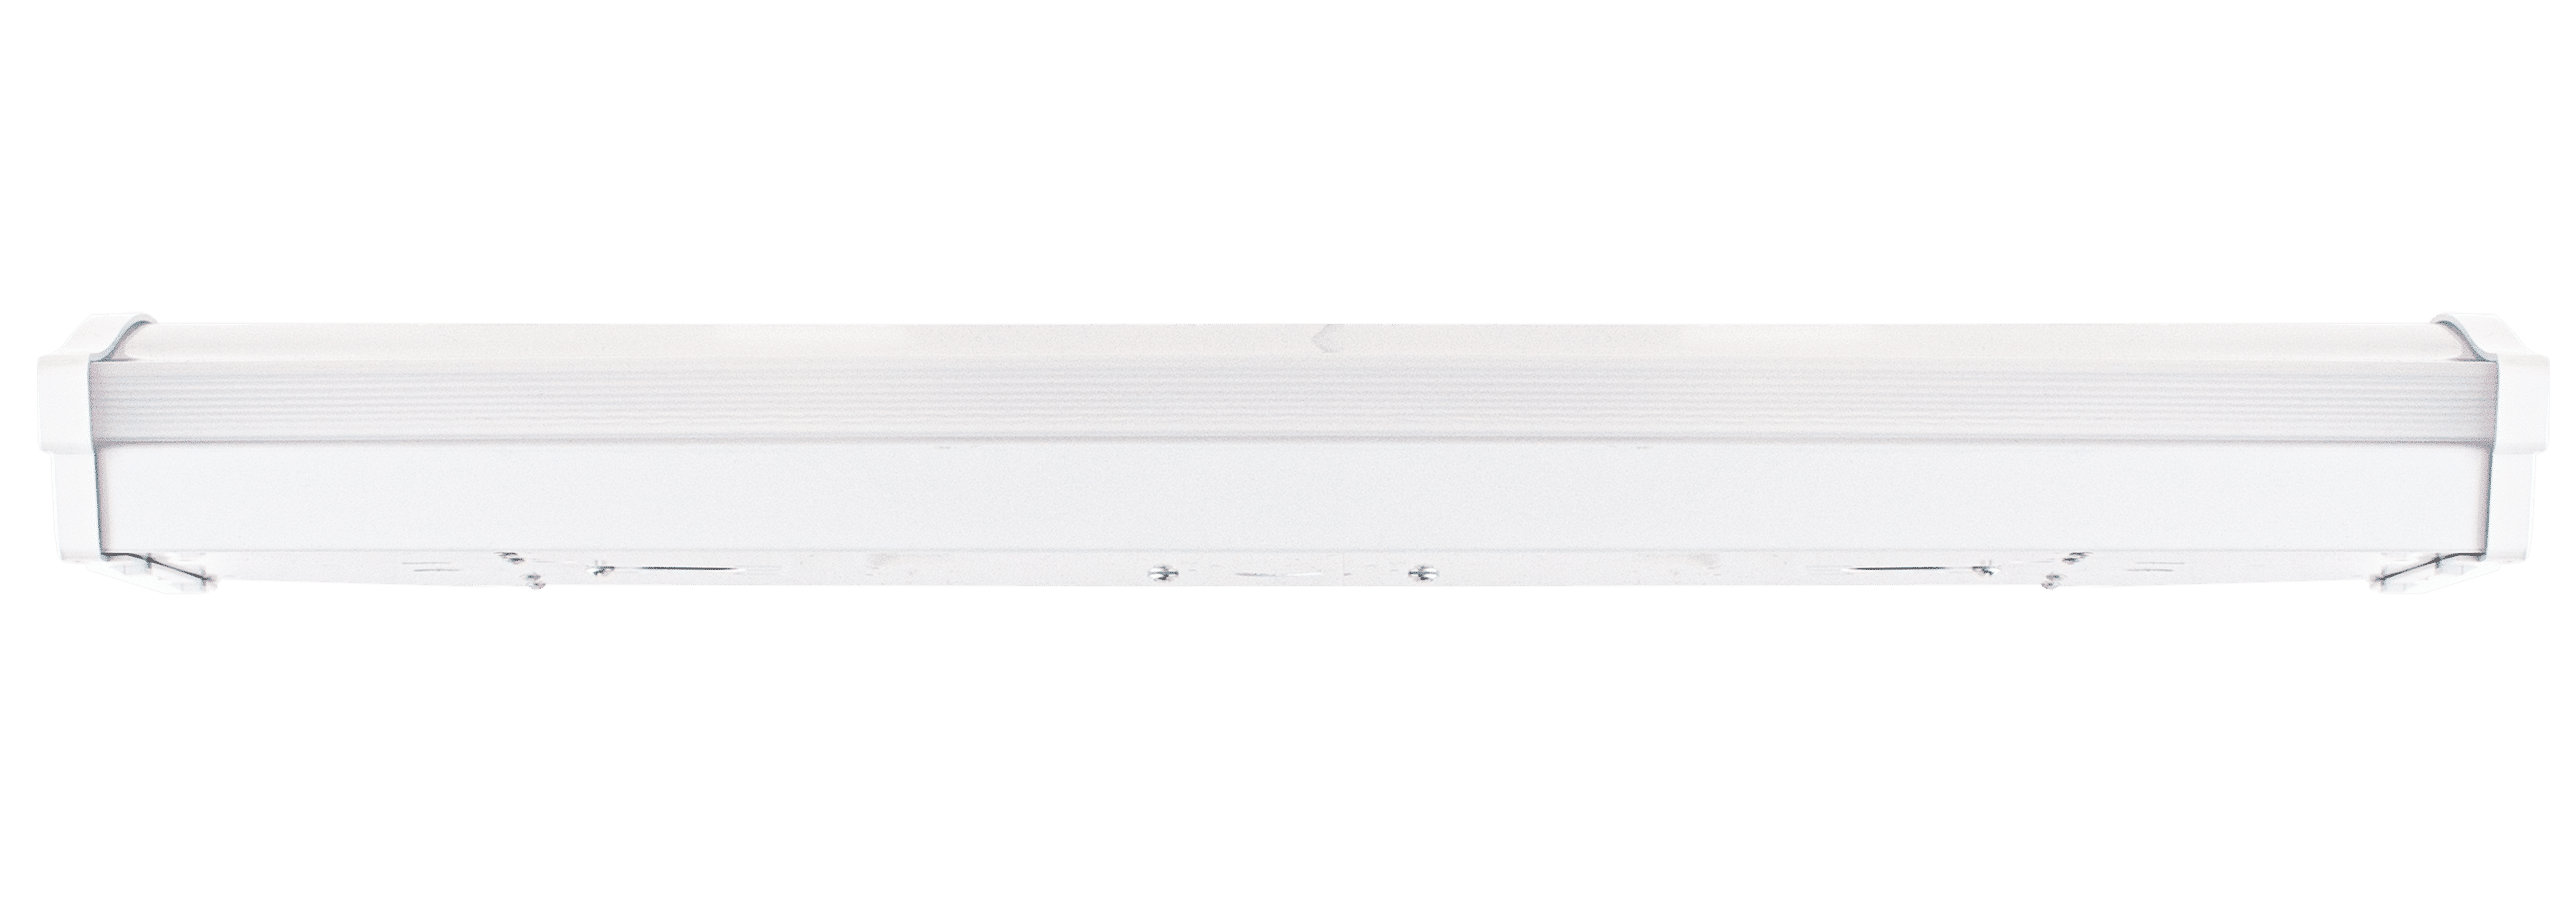 Westgate WA-2FT-25W-50K-D LED Architectural Wrap-Around Light - White